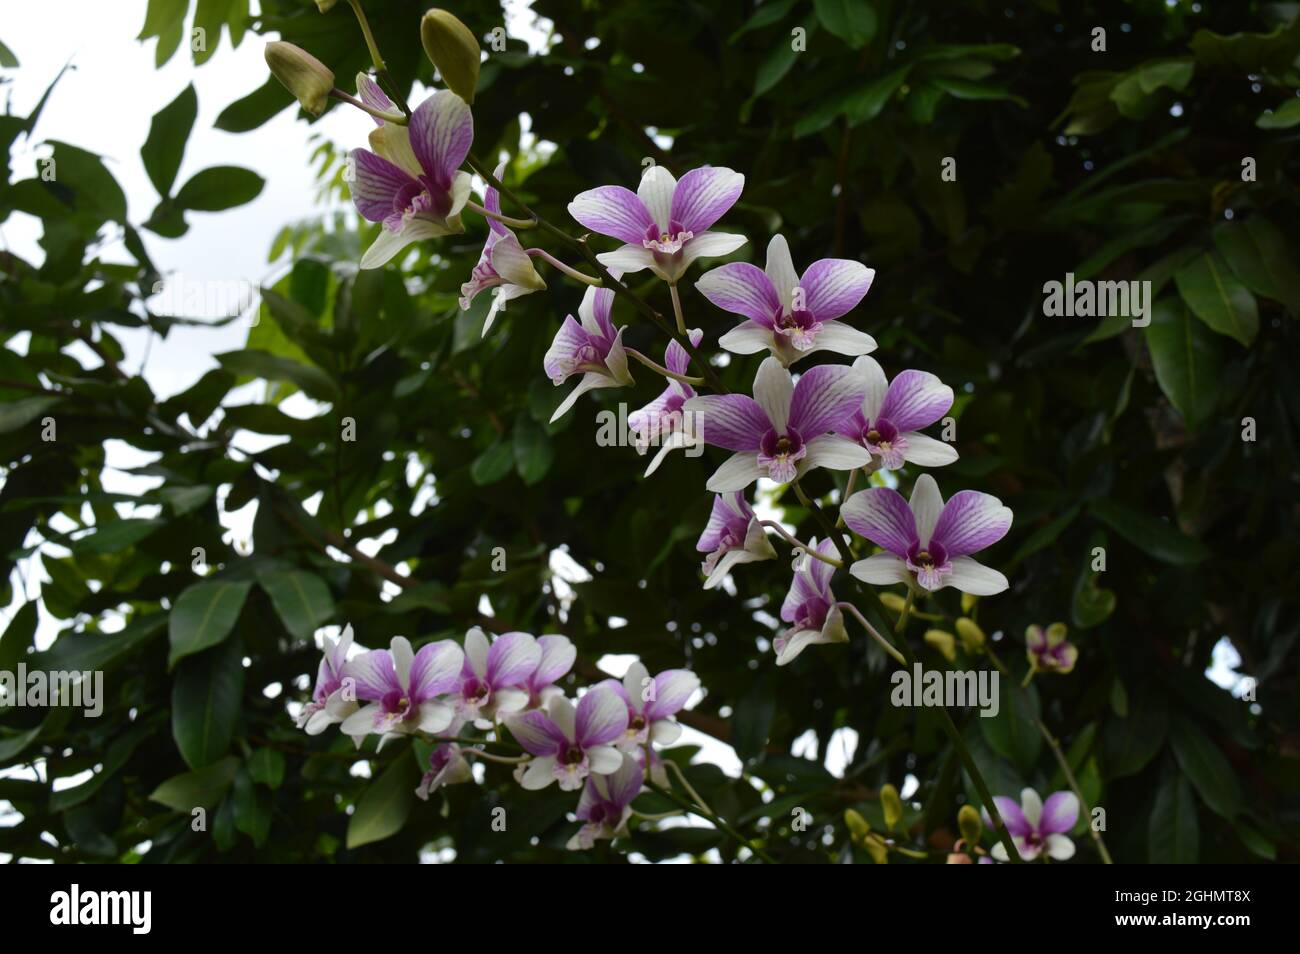 Due rami di orchidee di Moth viola e bianche fiorite Foto Stock